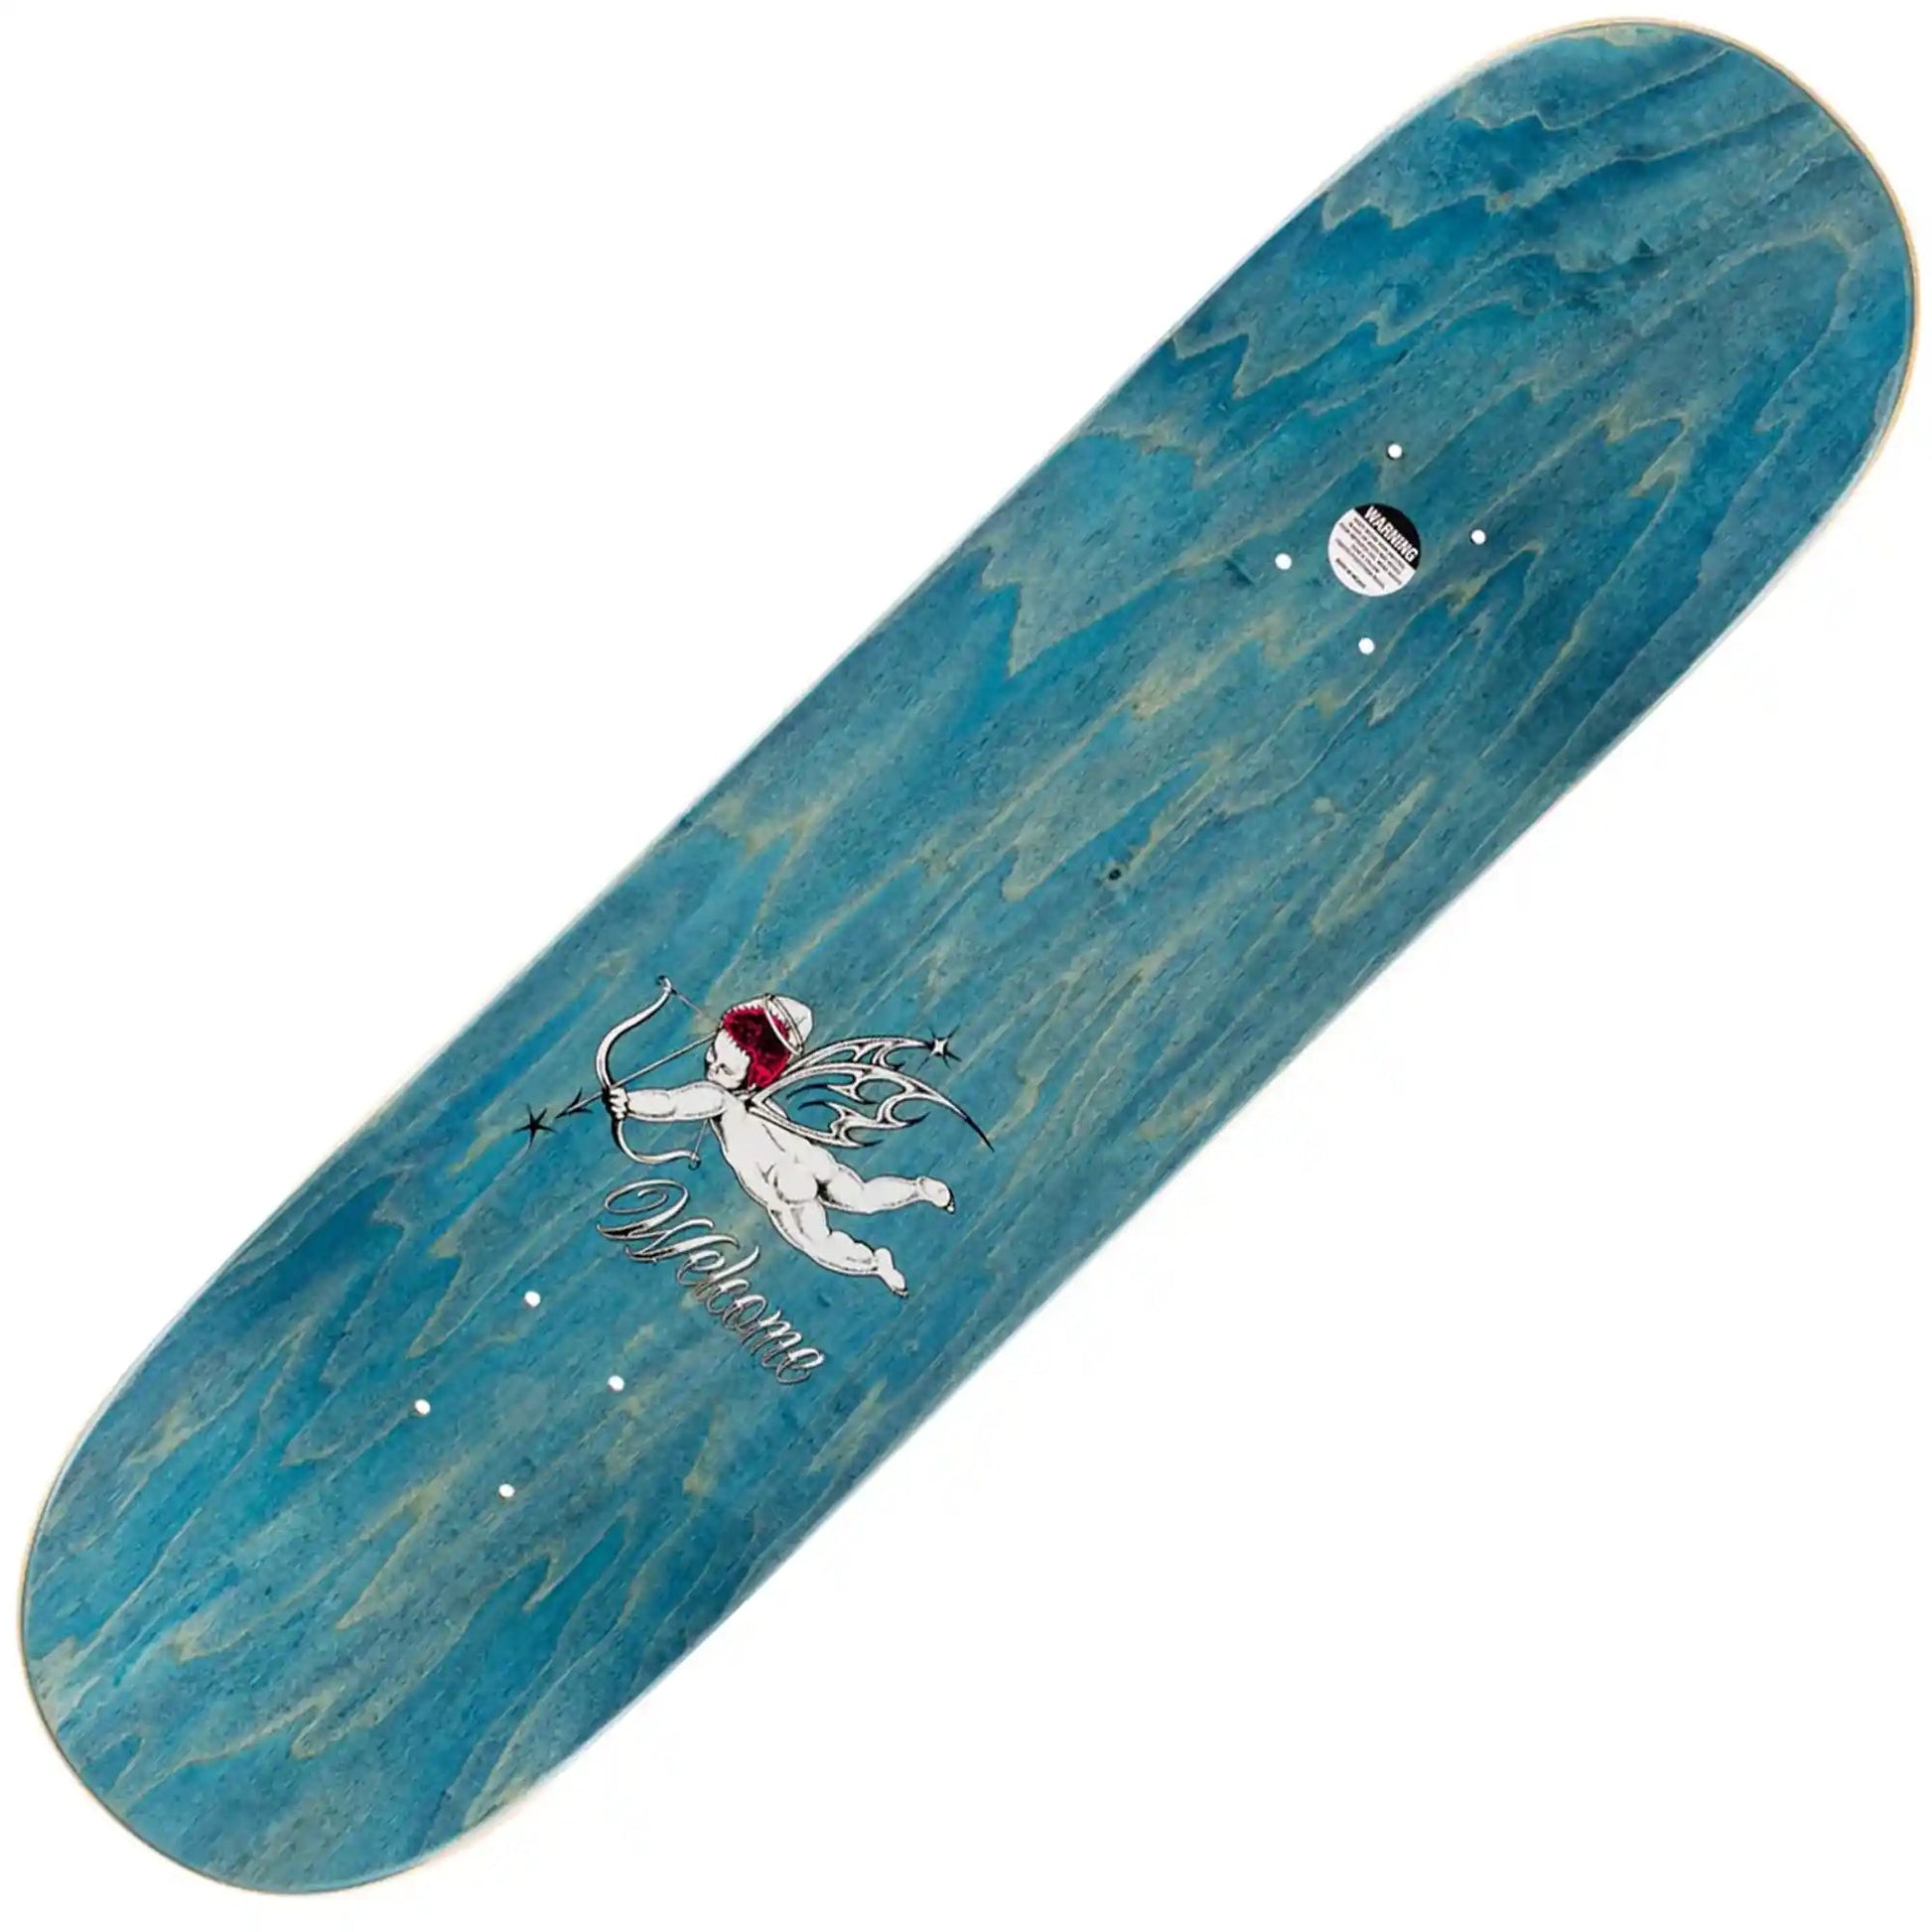 Welcome Cherubs Evan Mock Pro Model Deck (8.38"), light pink - Tiki Room Skateboards - 2